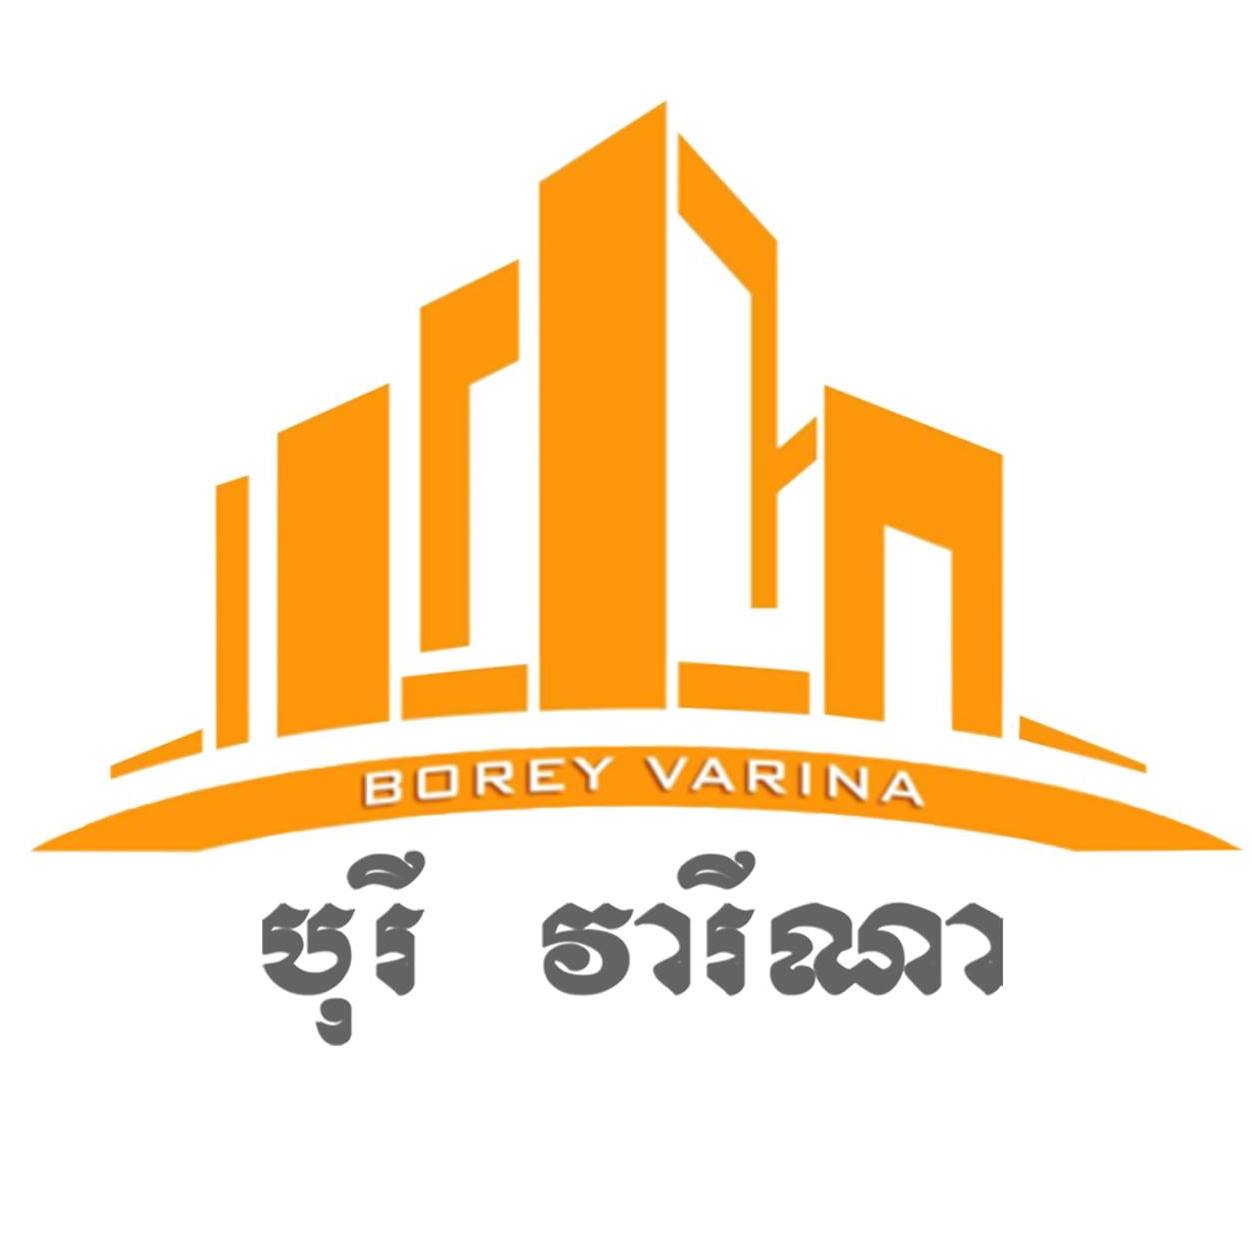 Borey Varina